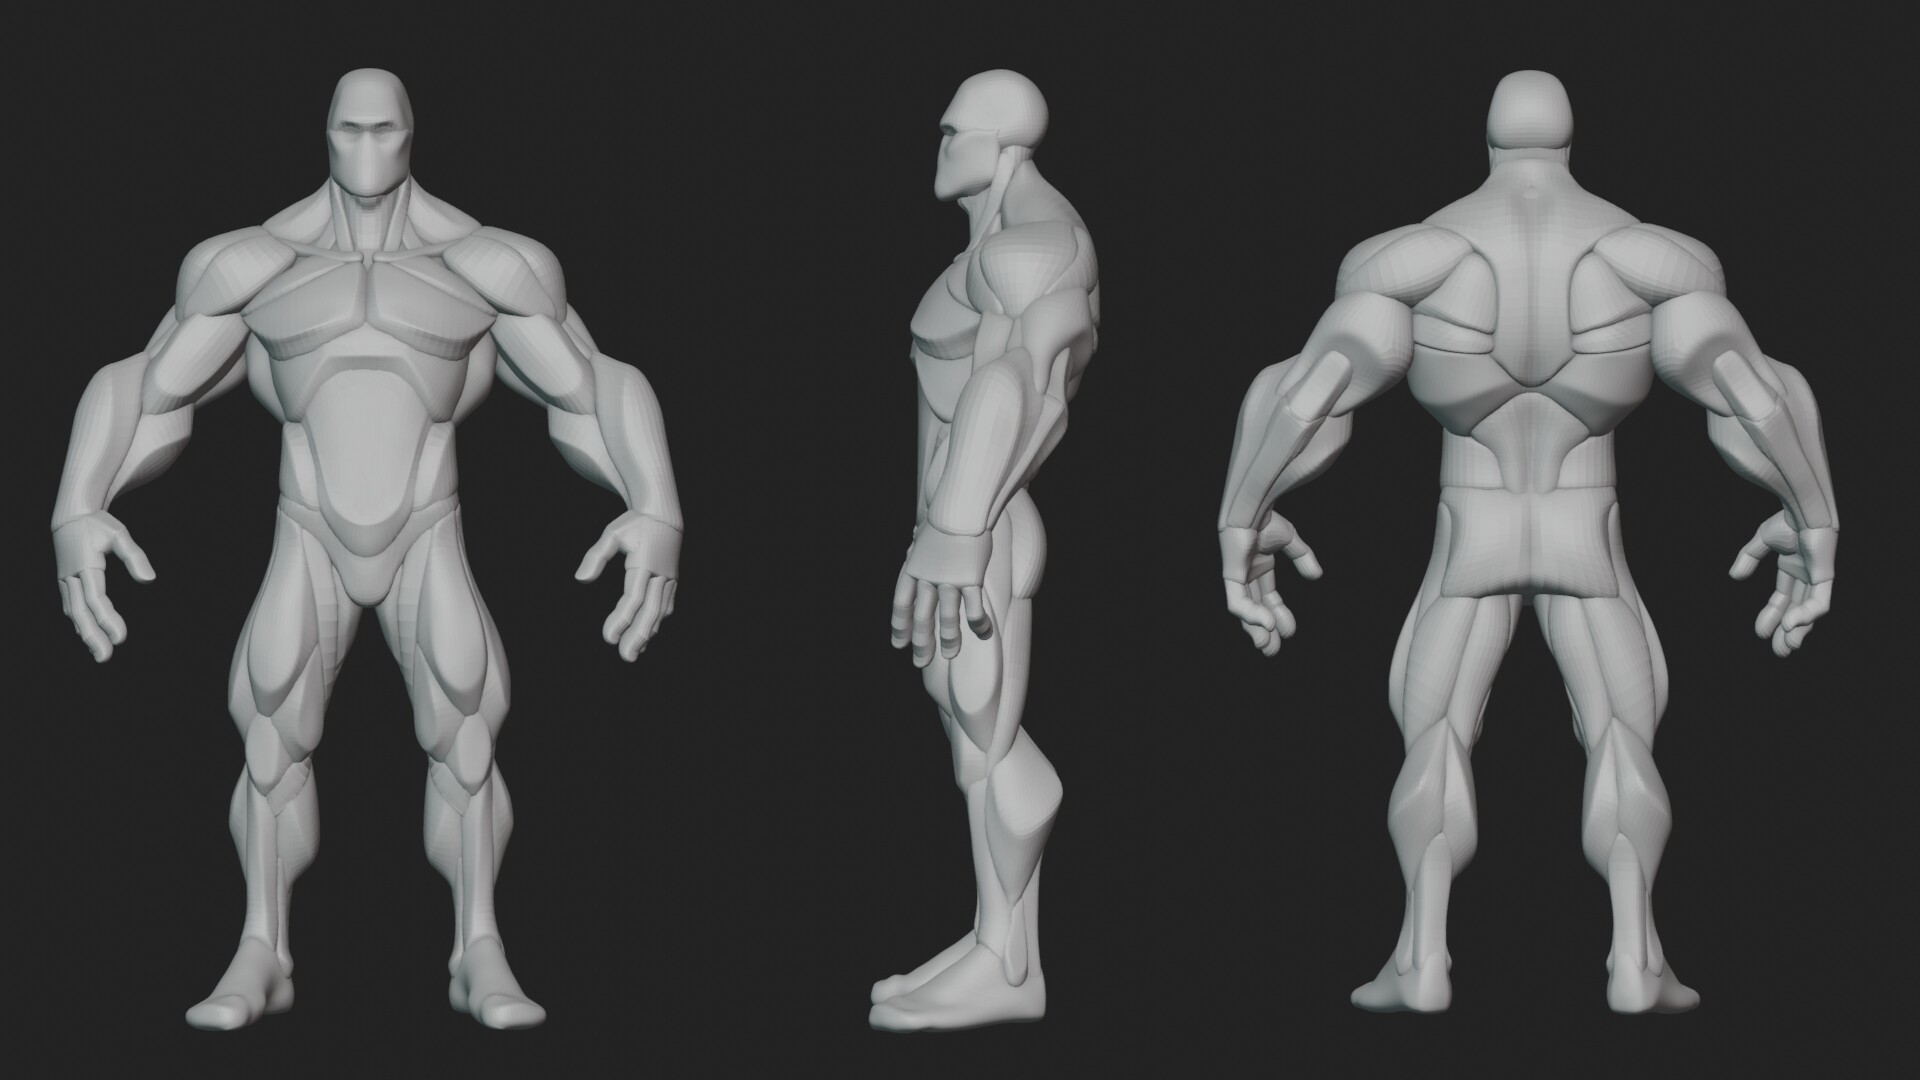 Stylized Hero Anatomy - Finished Projects - Blender Artists Community